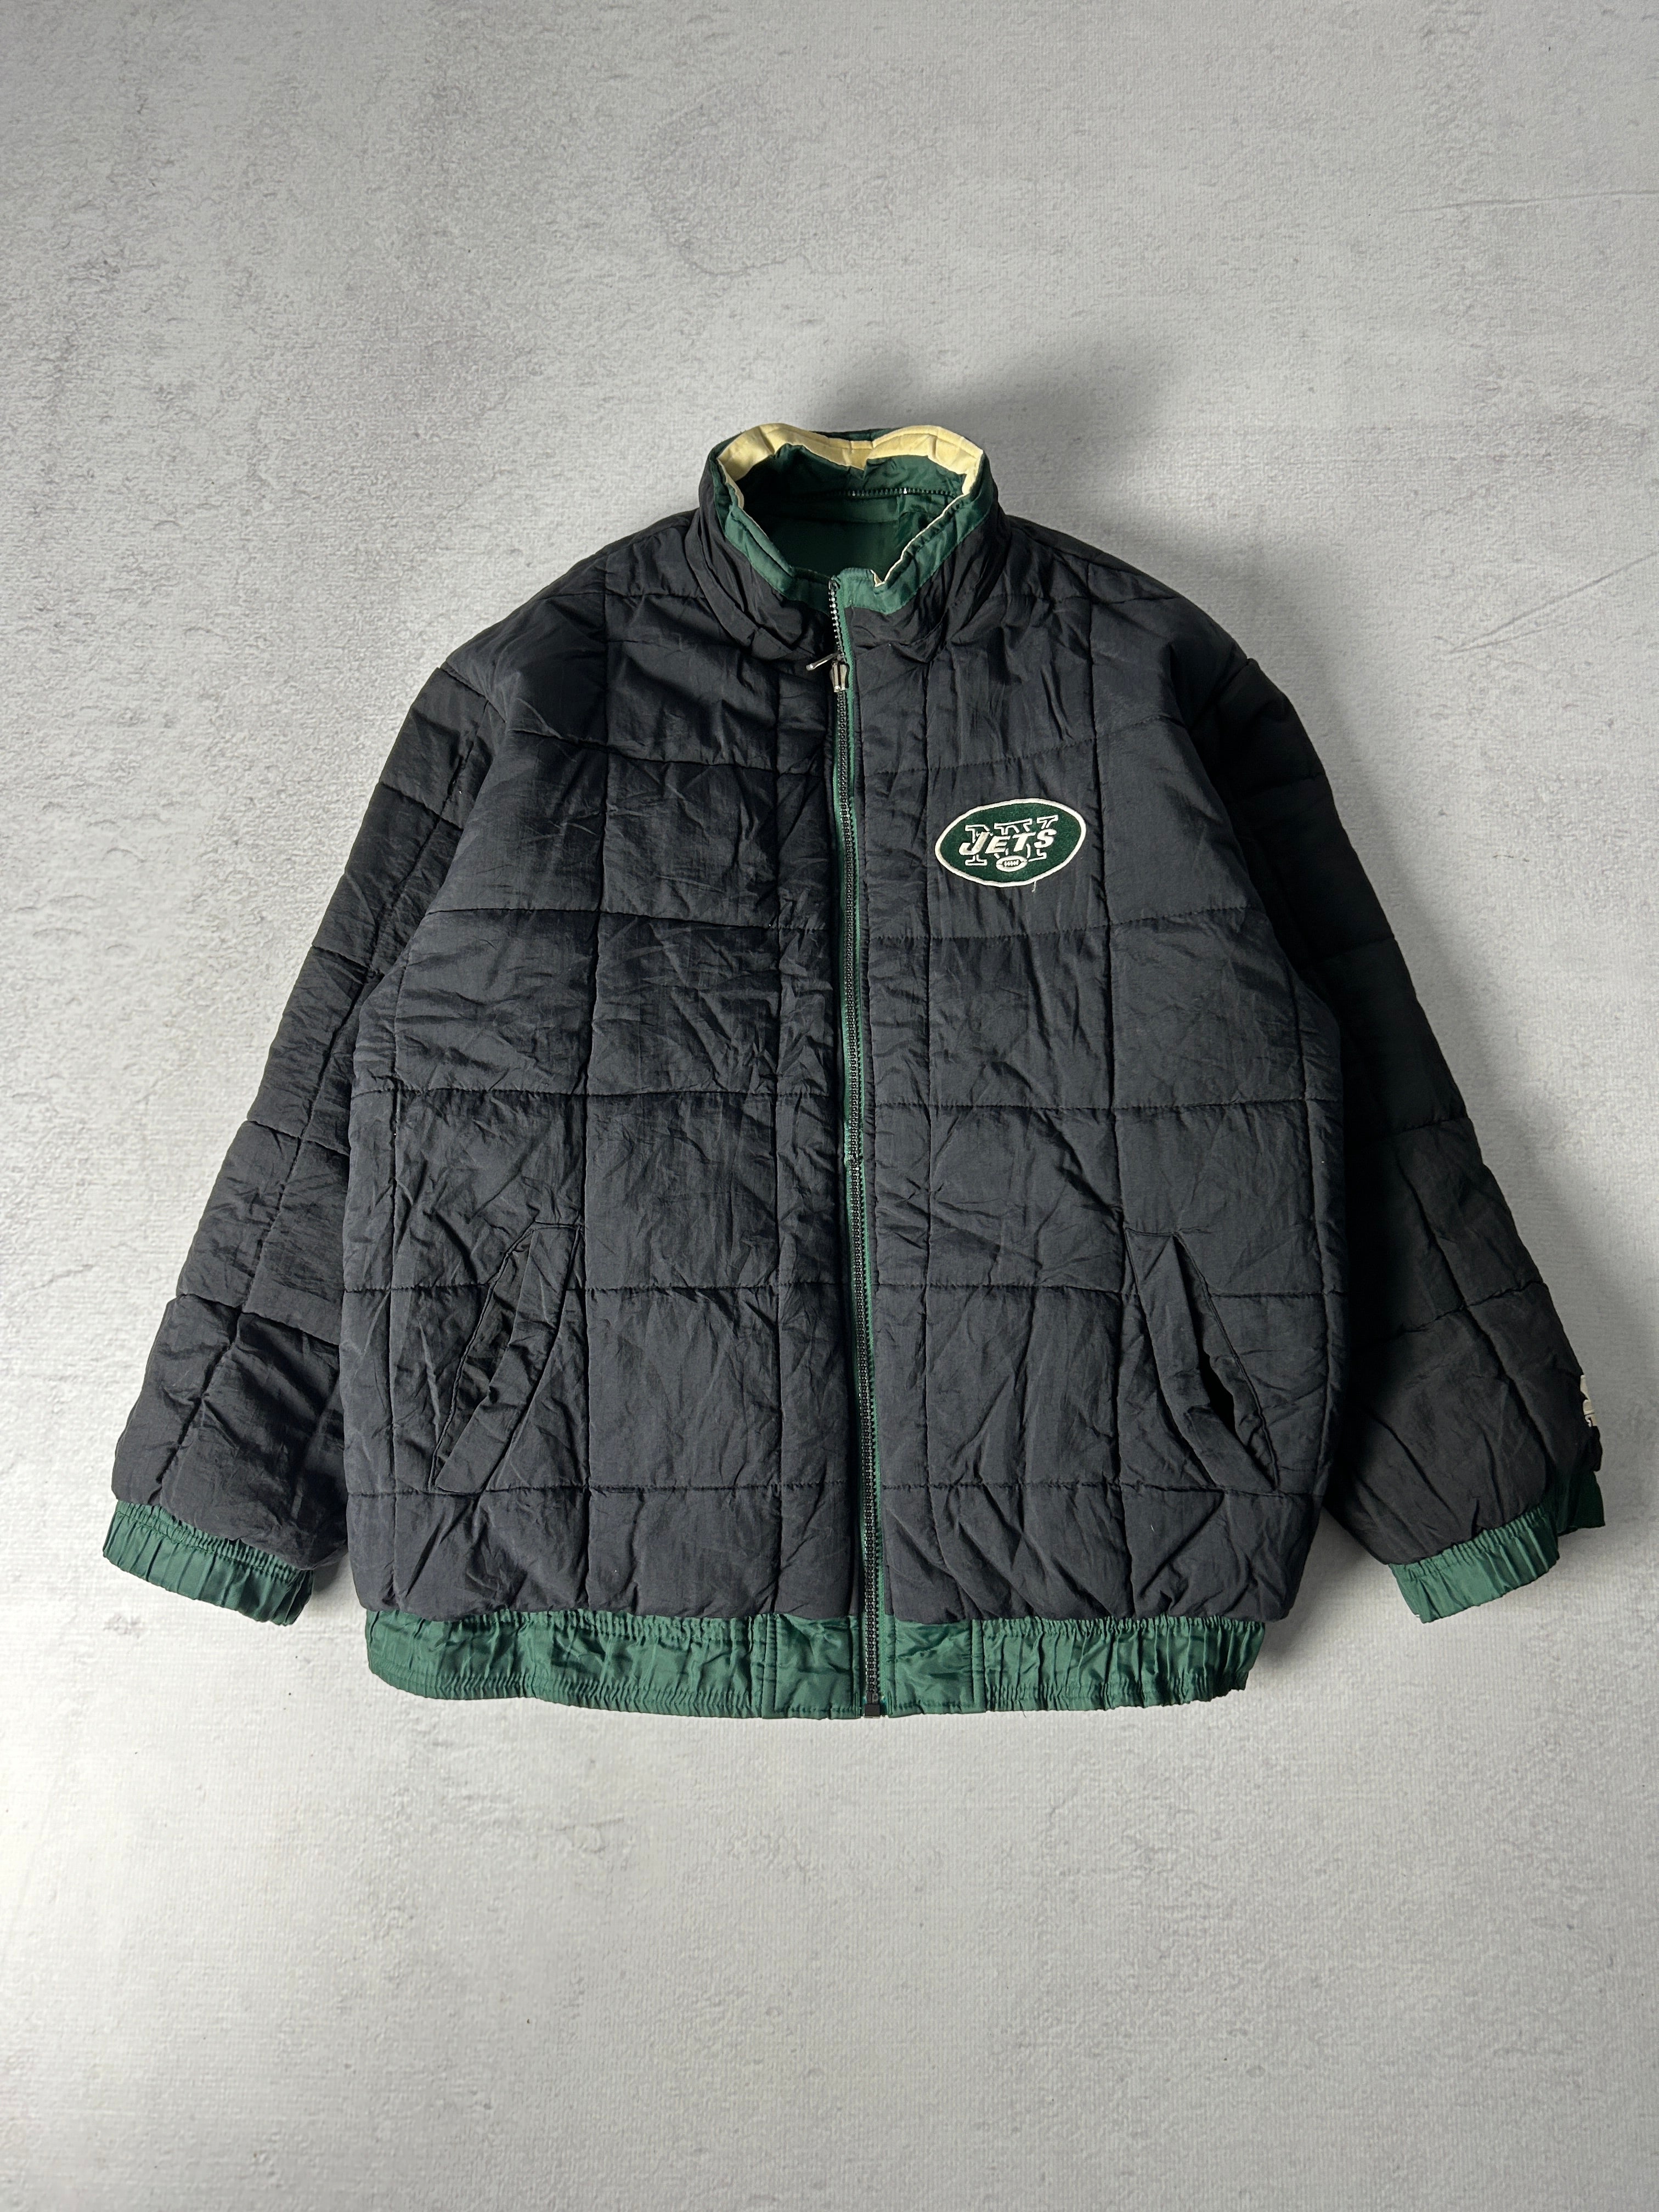 Vintage NFL New York Jets Insulated Jacket - Men's XL